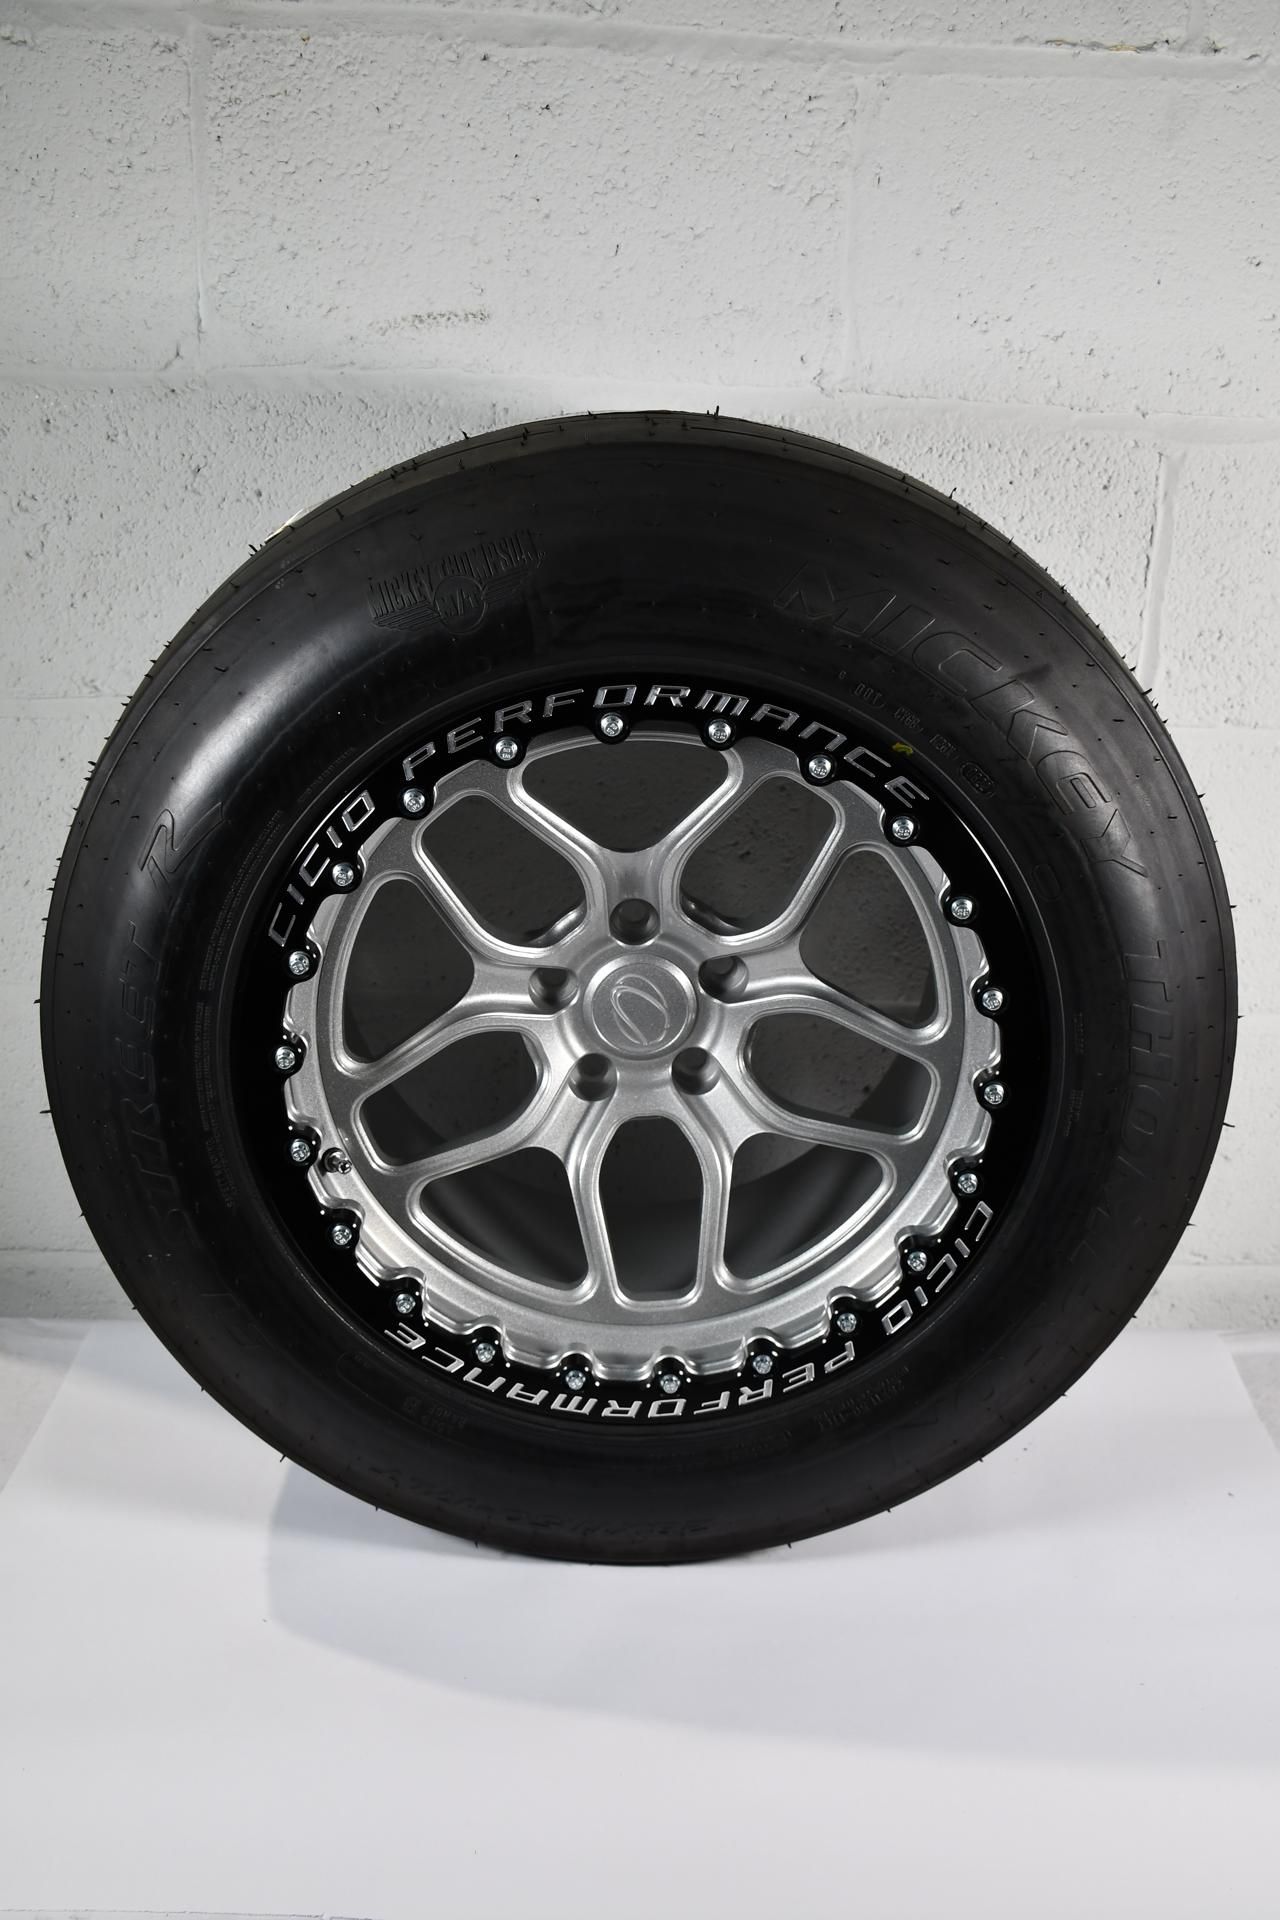 Two Cicio Performance Drag Wheels for a Nissan R35 GTR with Mickey Thompson E.T Street R Tyres.